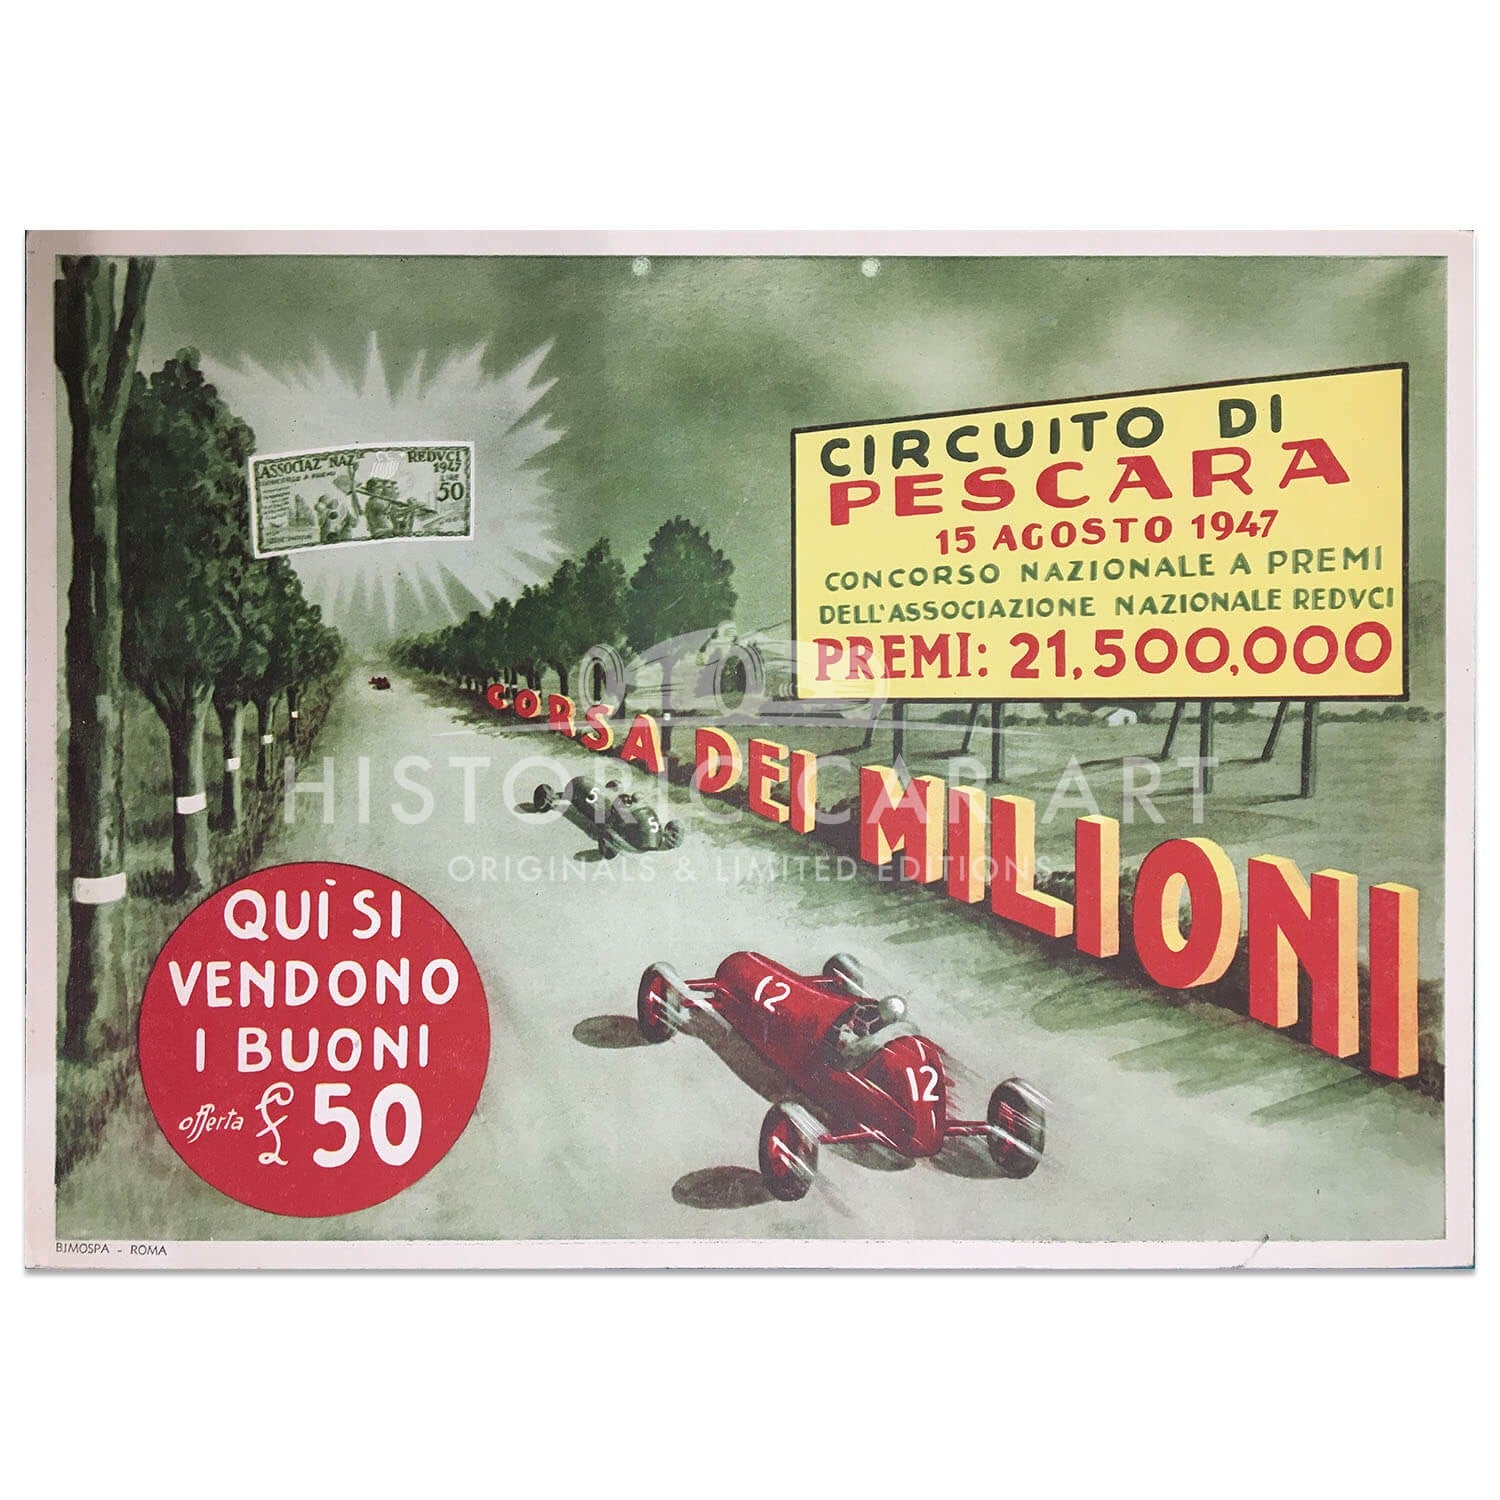 Italian | Circuito di Pescara 1947 | Original Poster